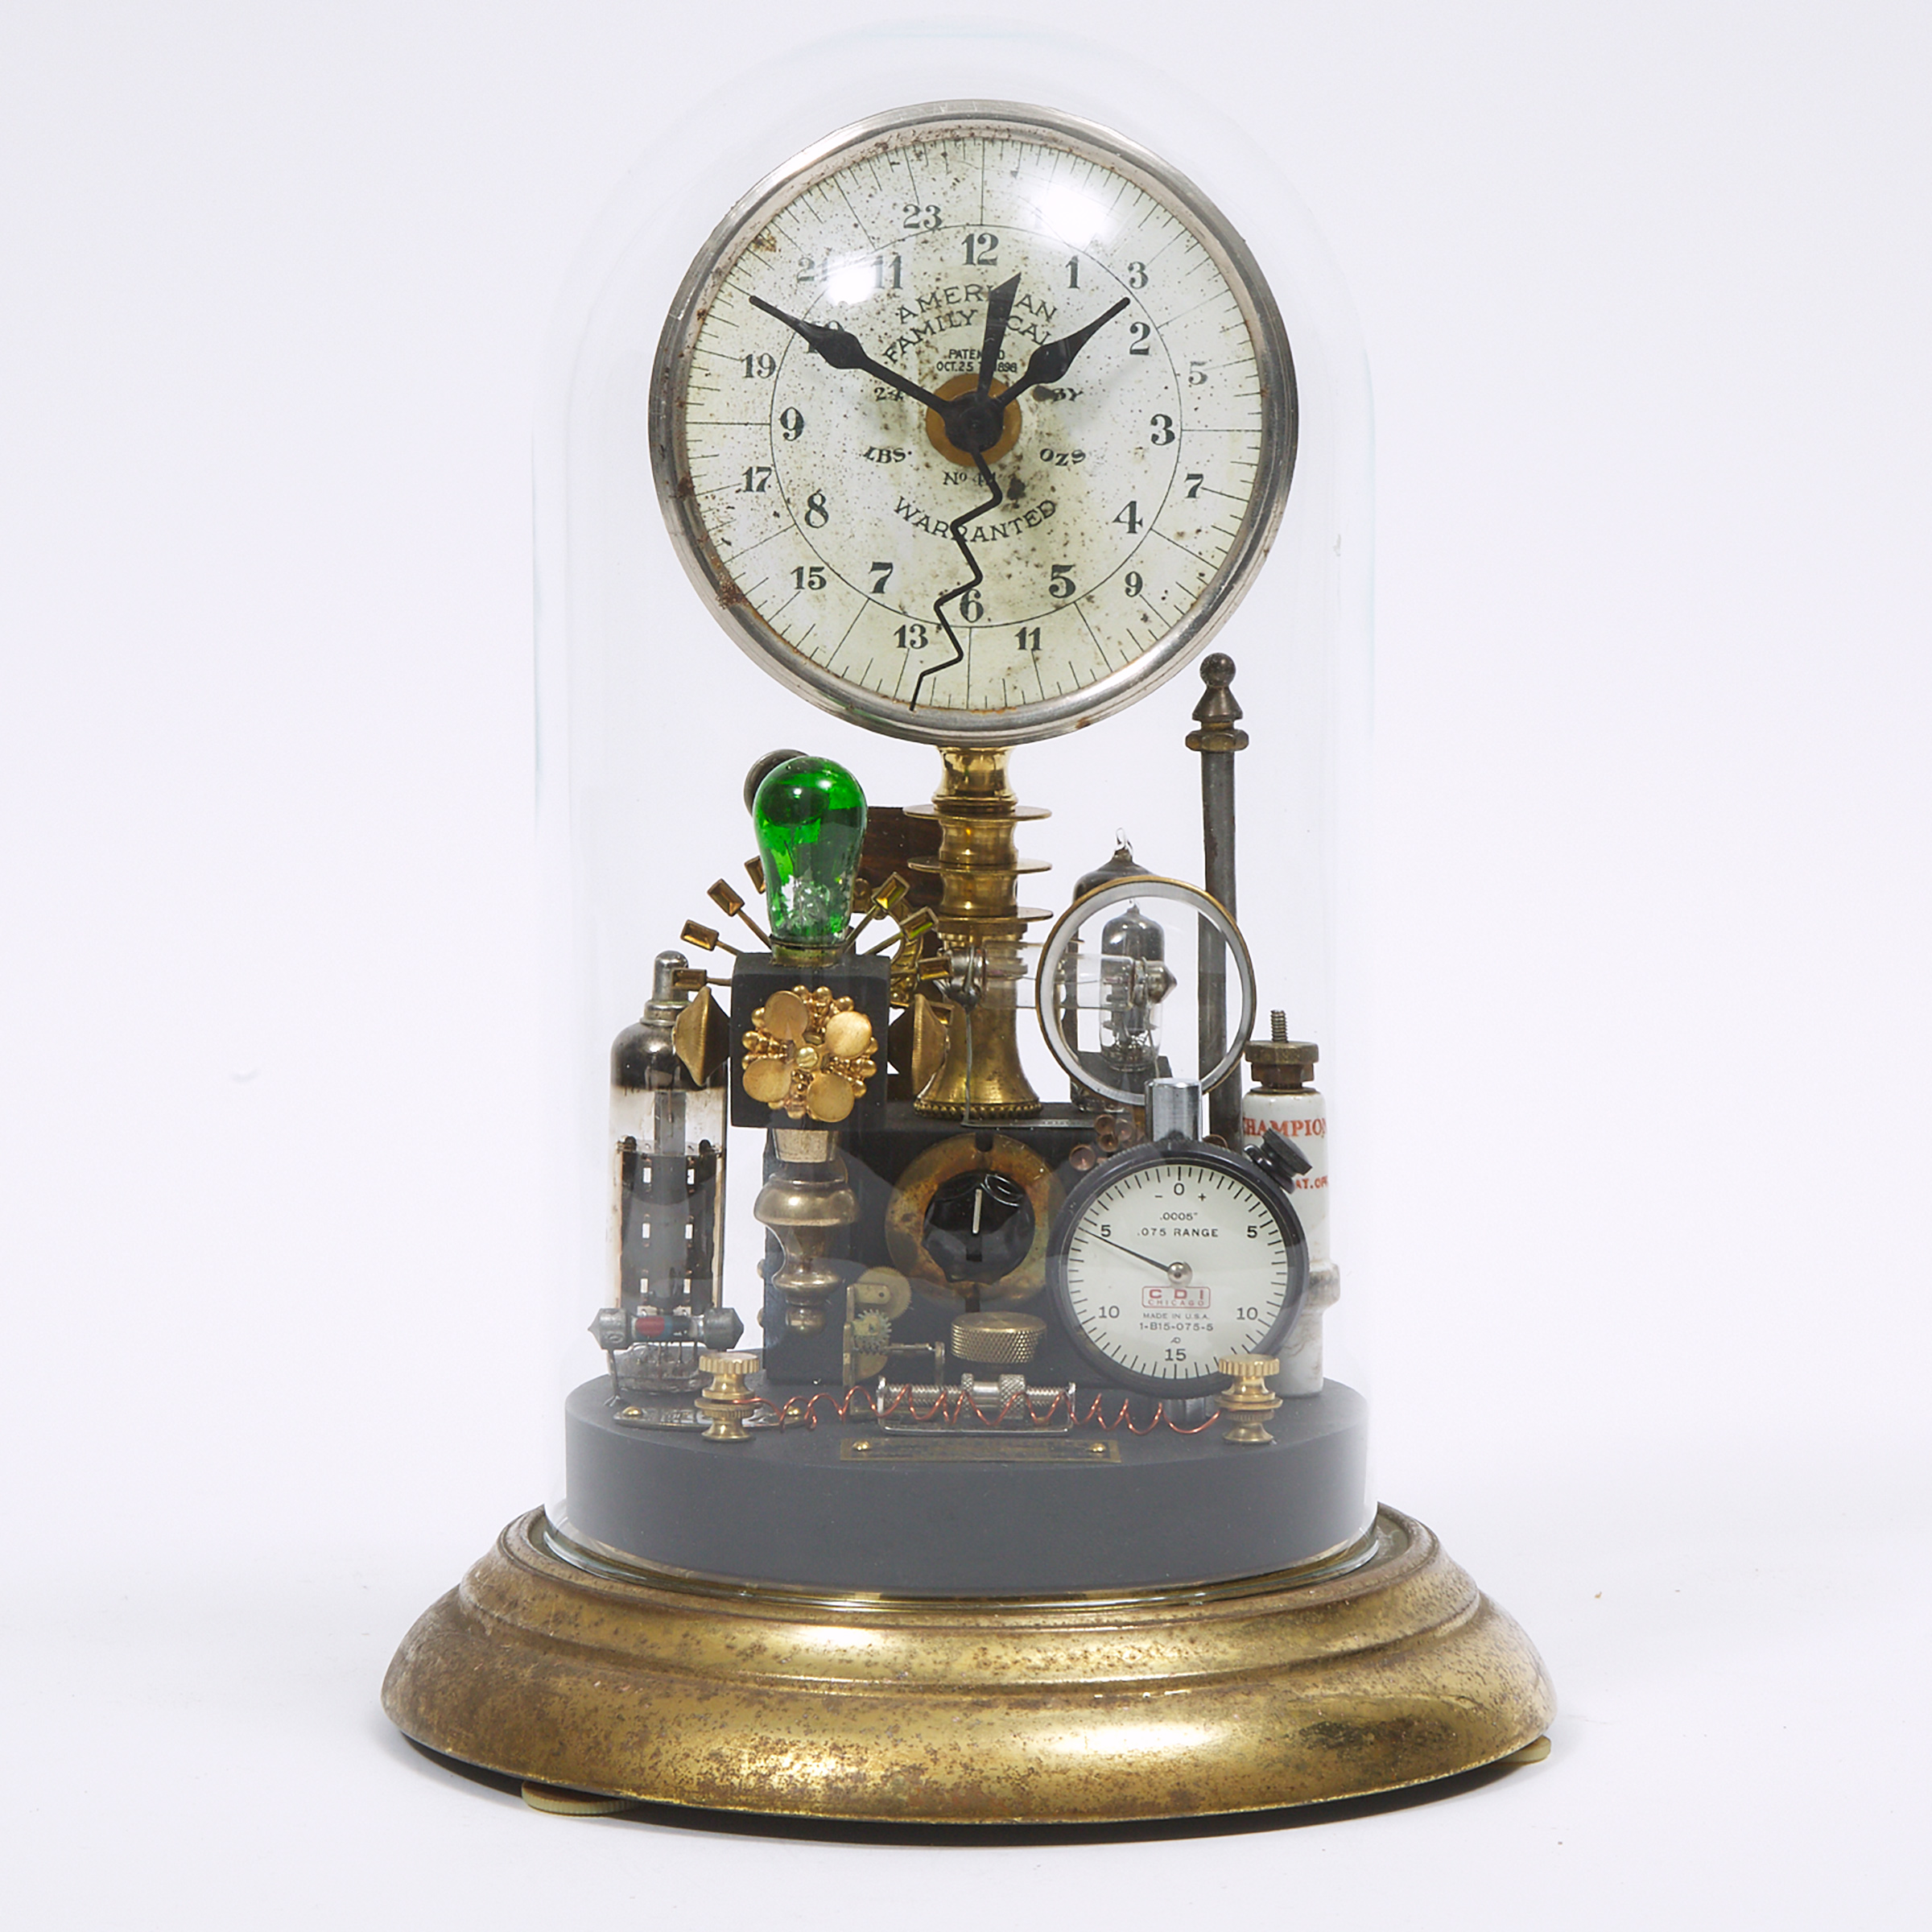 Klockwerks Industrial Steampunk Table Clock by Roger Wood, Hamilton, 21st century